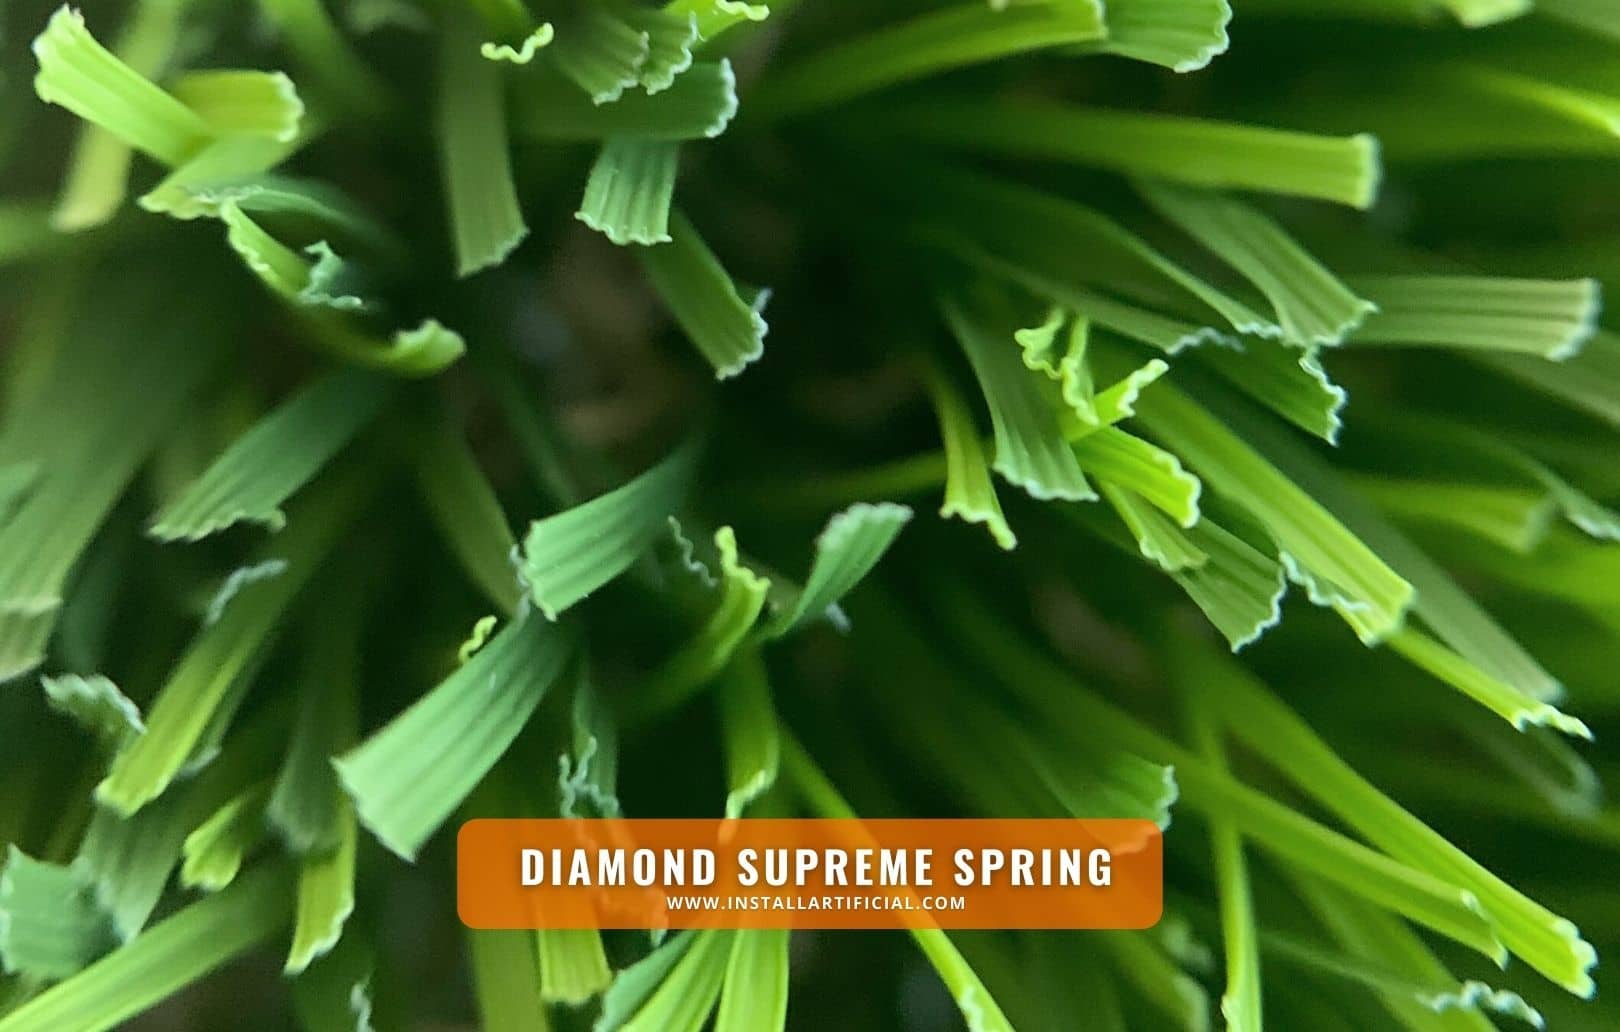 Diamond Supreme Spring, Synthetic Grass Warehouse, Tiger Turf, macro